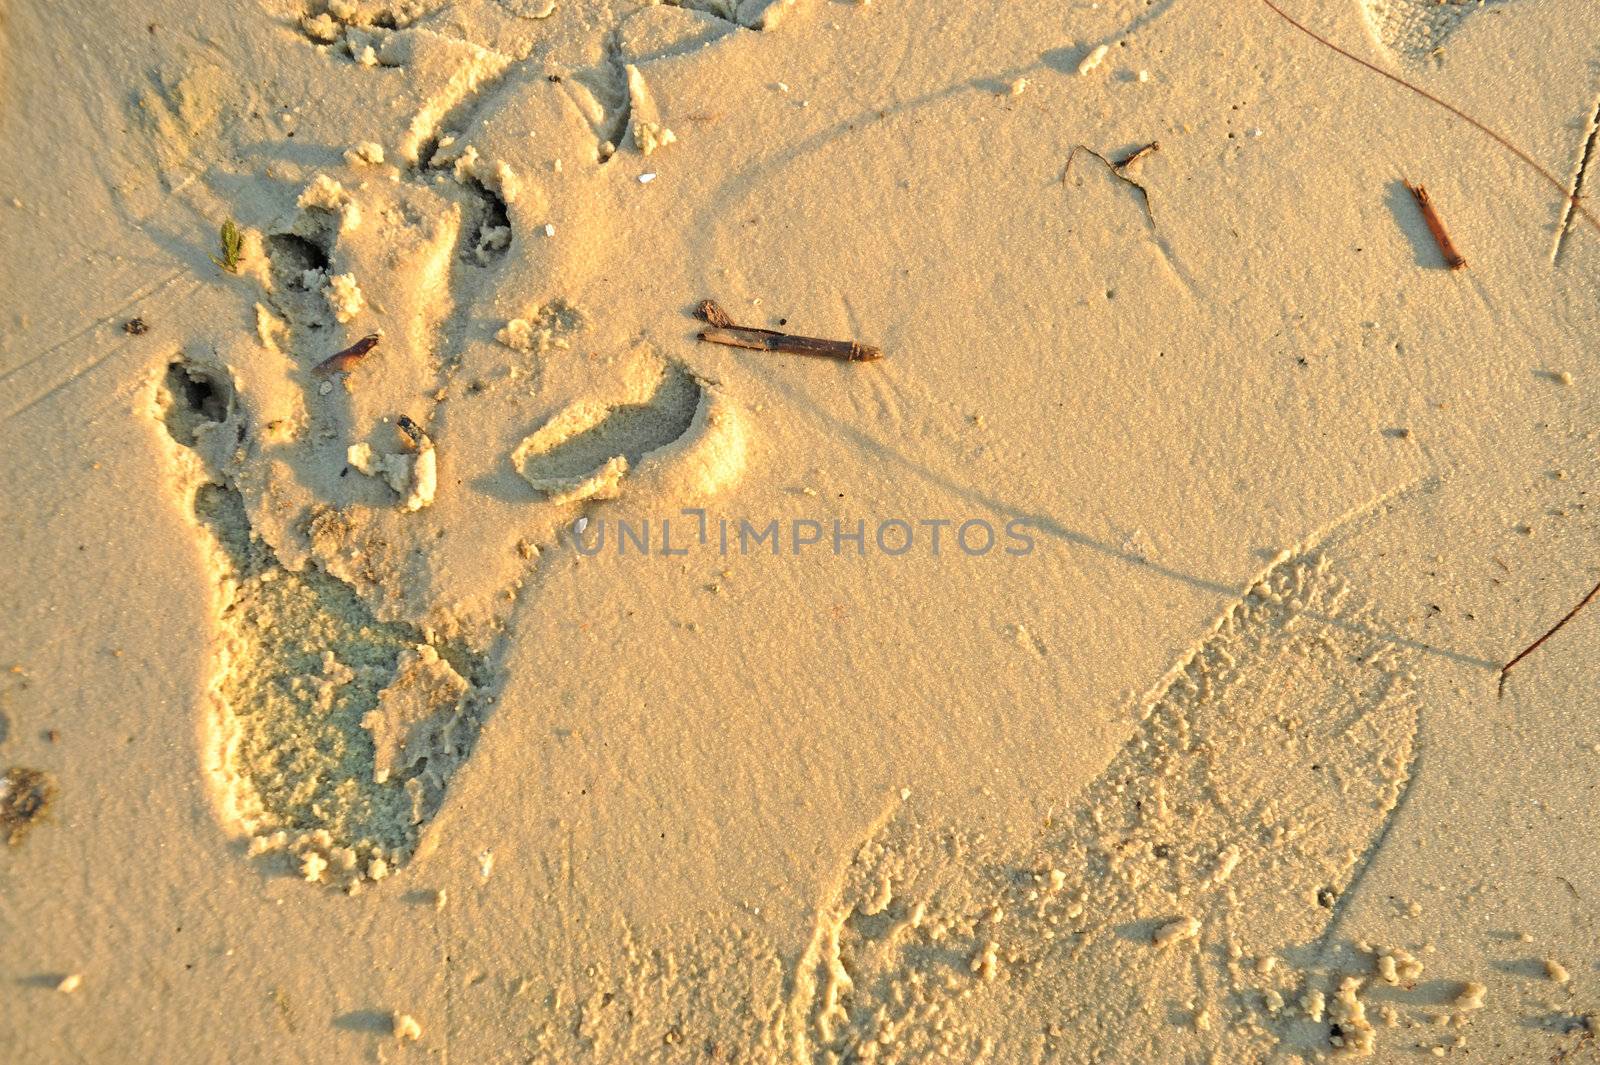 Alligator footprint in wet white sand by ftlaudgirl